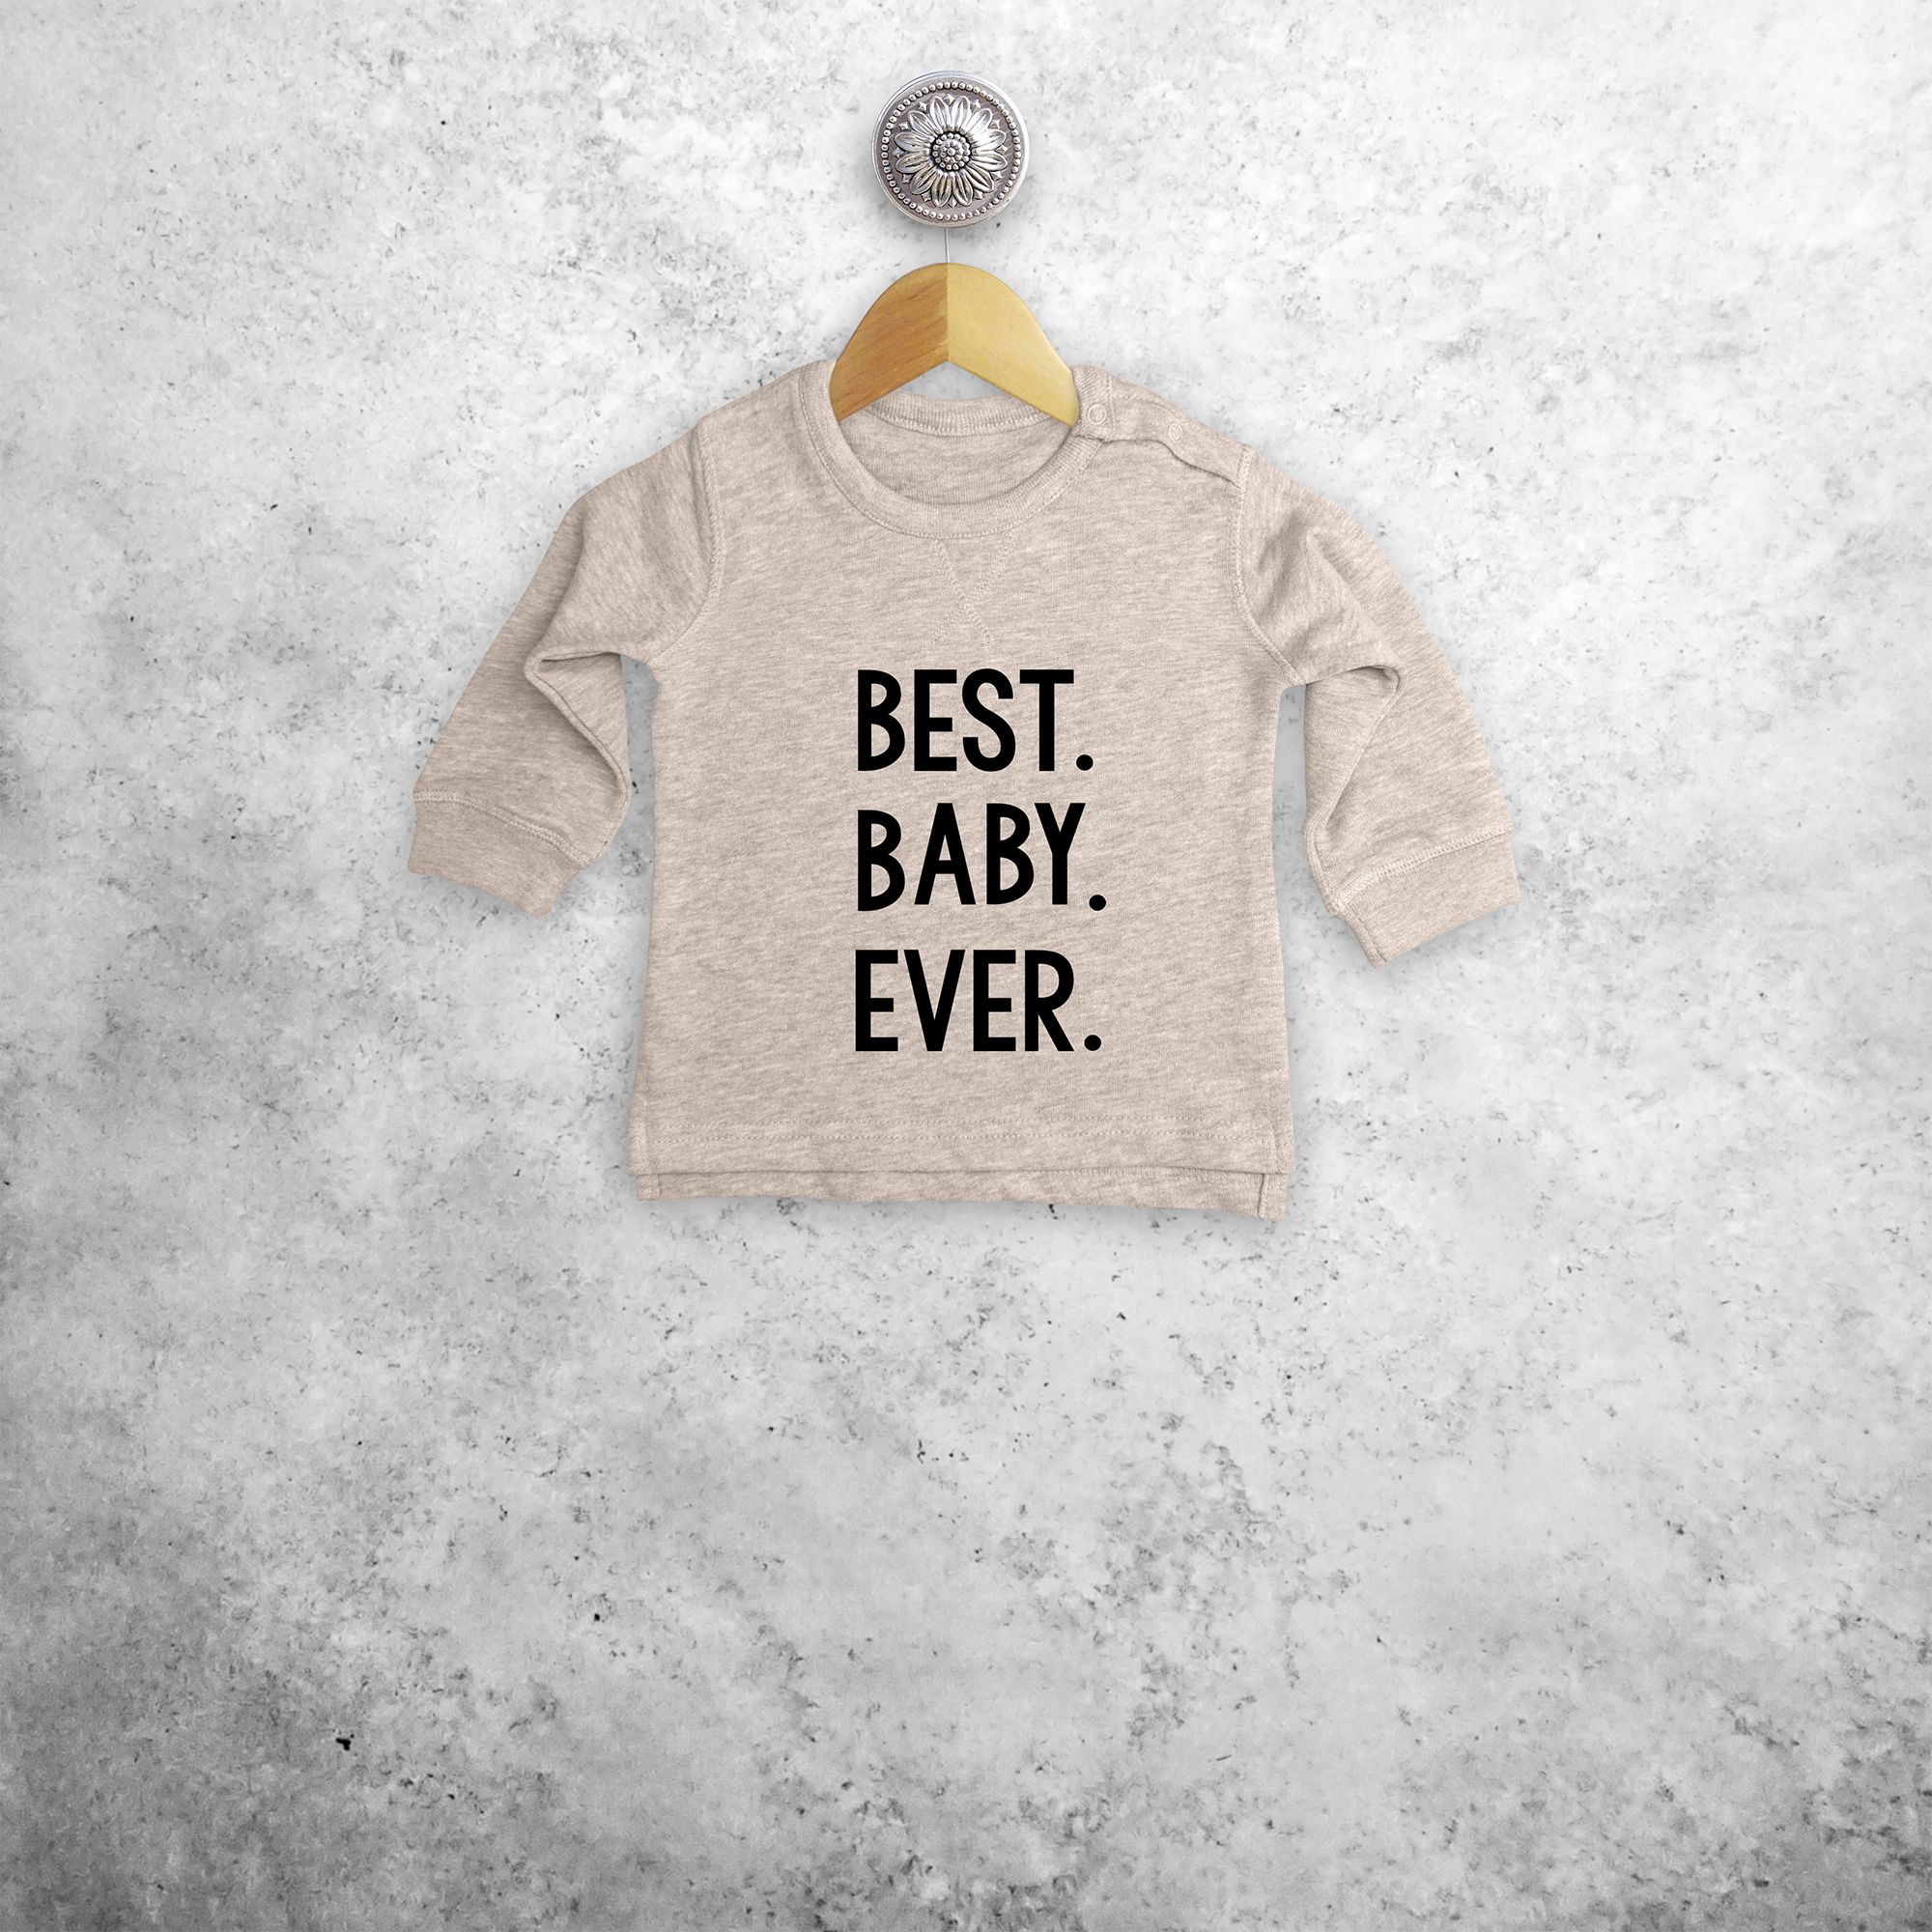 'Best. Baby. Ever.' baby trui